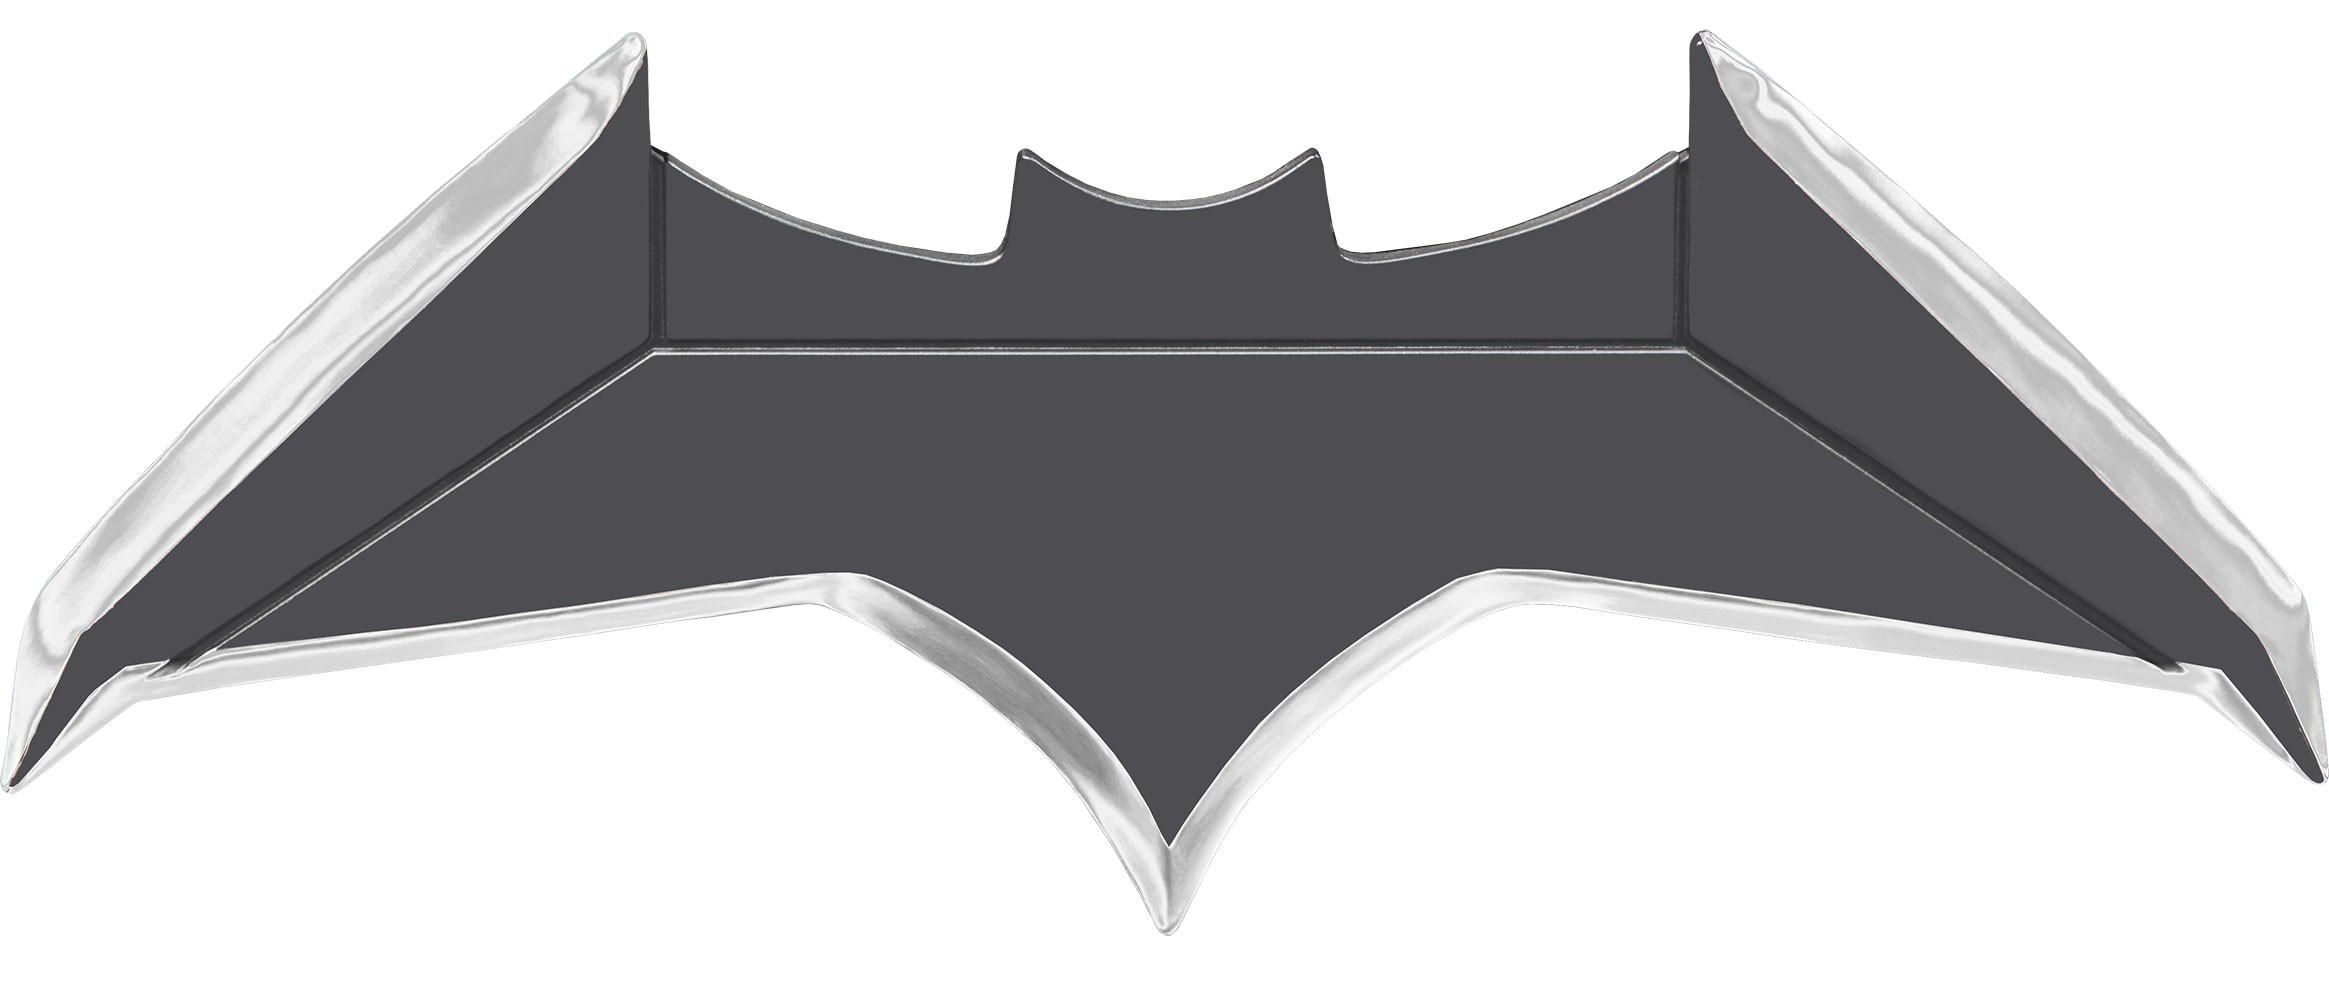 Justice League Metal Batarang (Prototype Shown) View 3